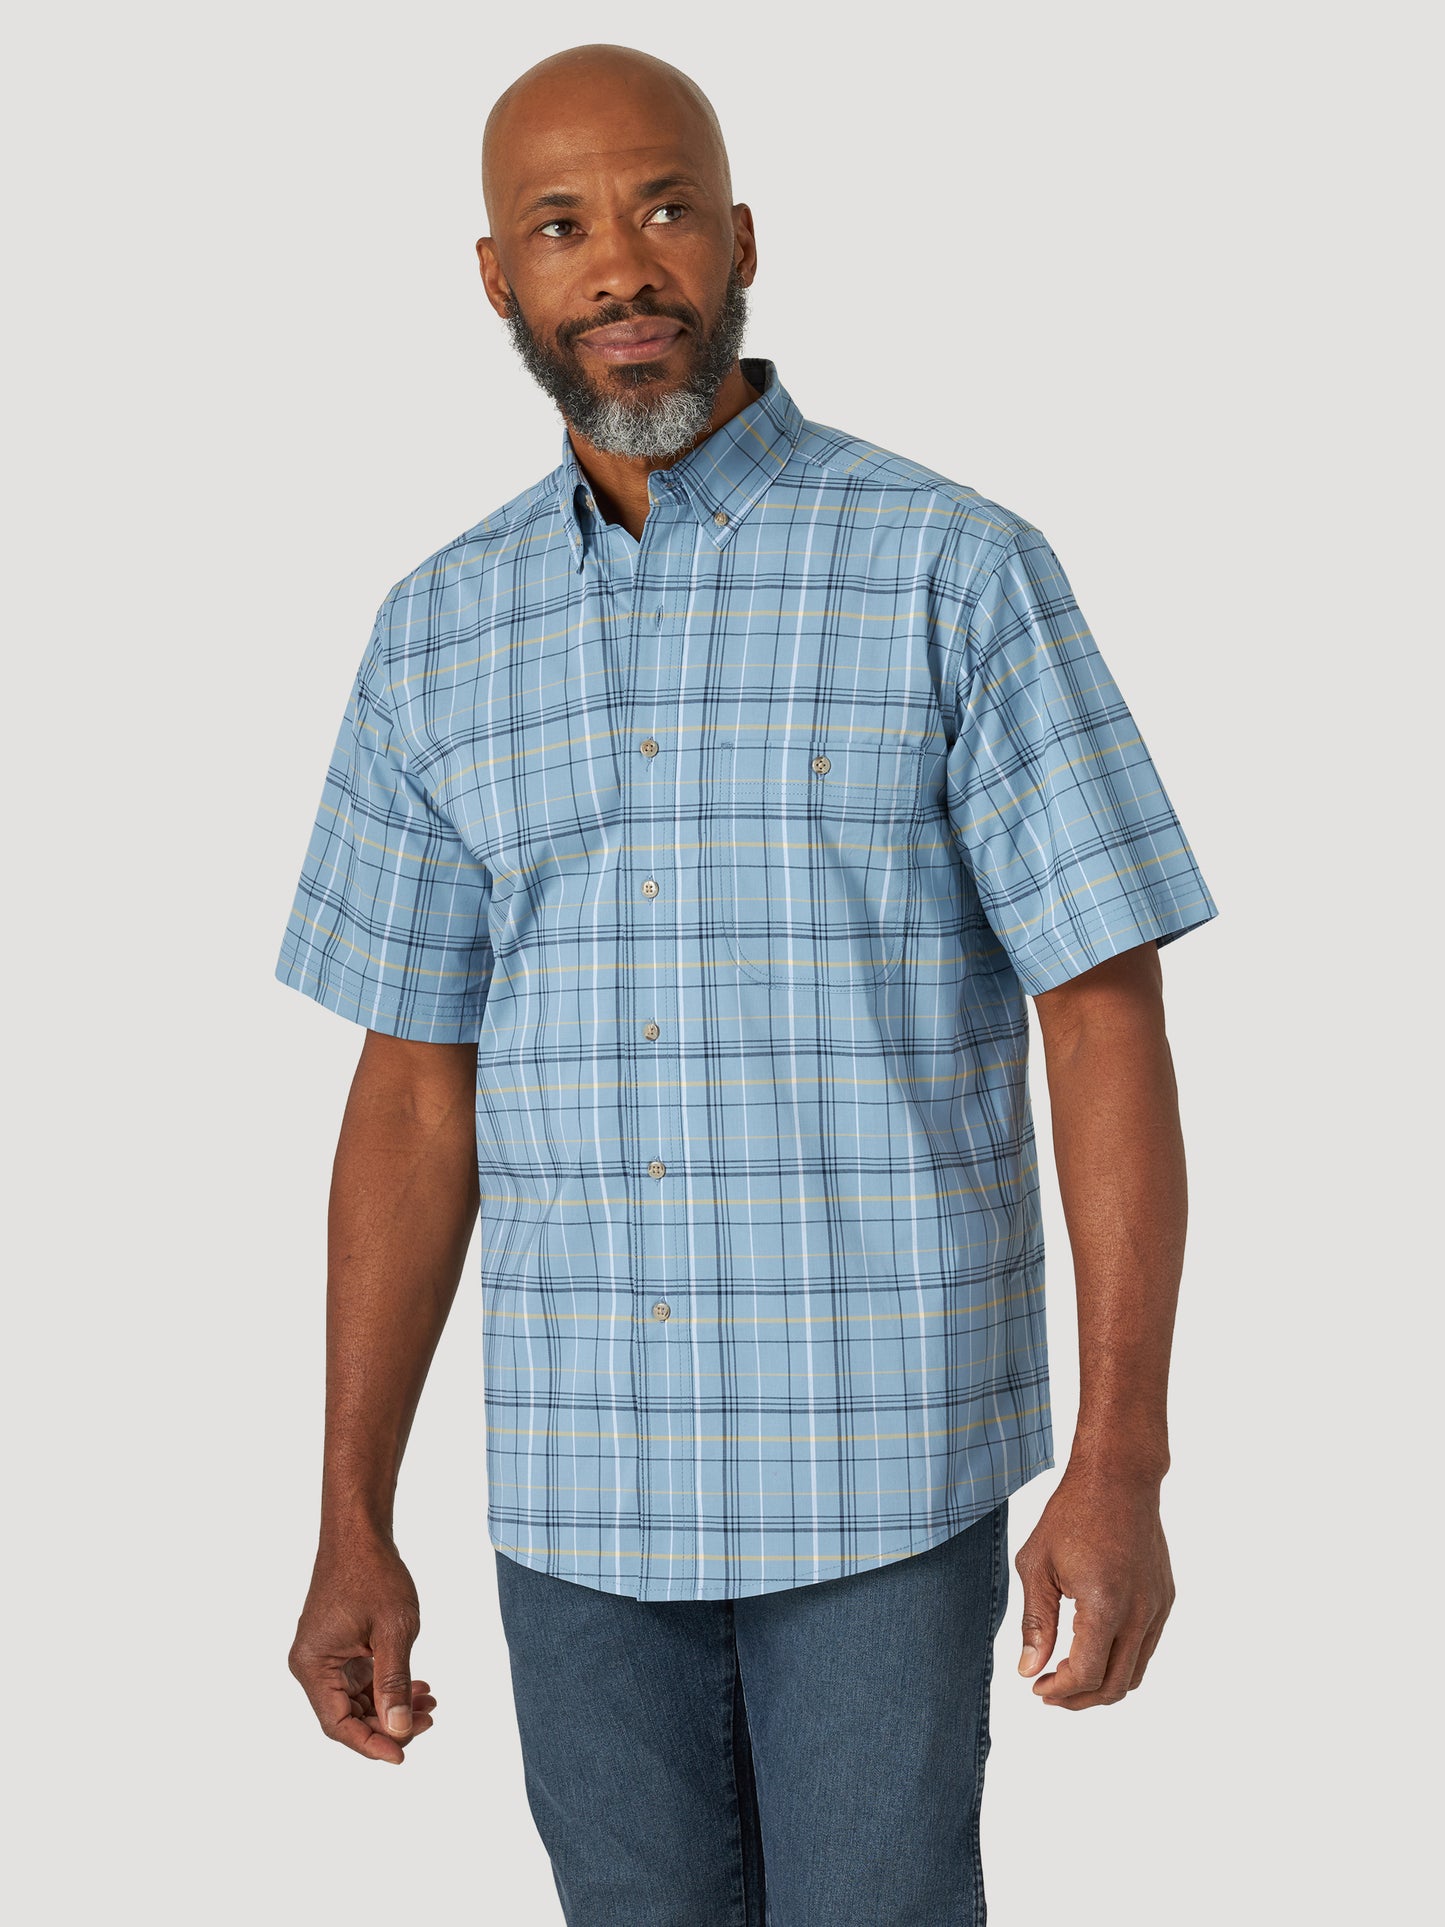 Rugged Wear Wrinkle Resist Blue Ridge Plaid Short Sleeve Shirt